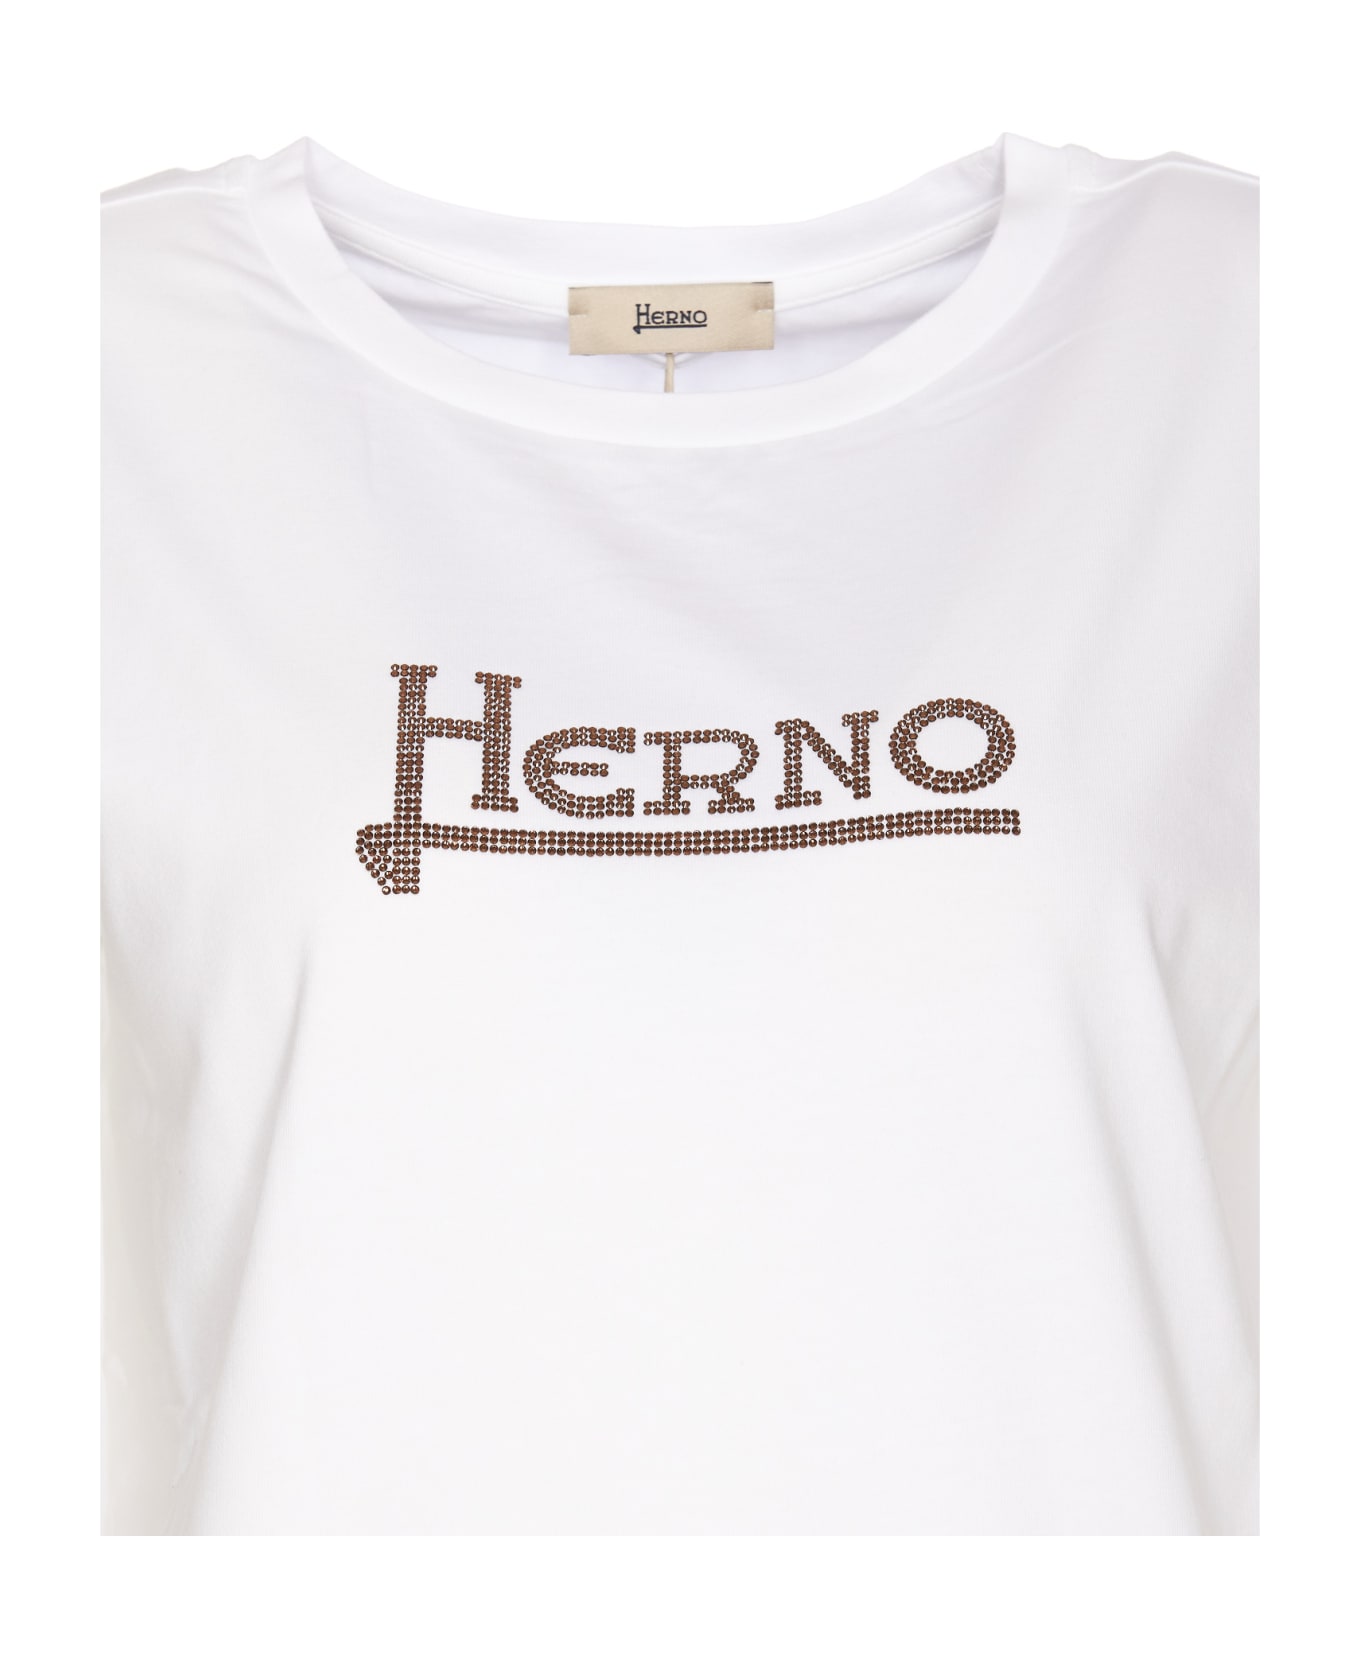 Herno Logo T-shirt - White